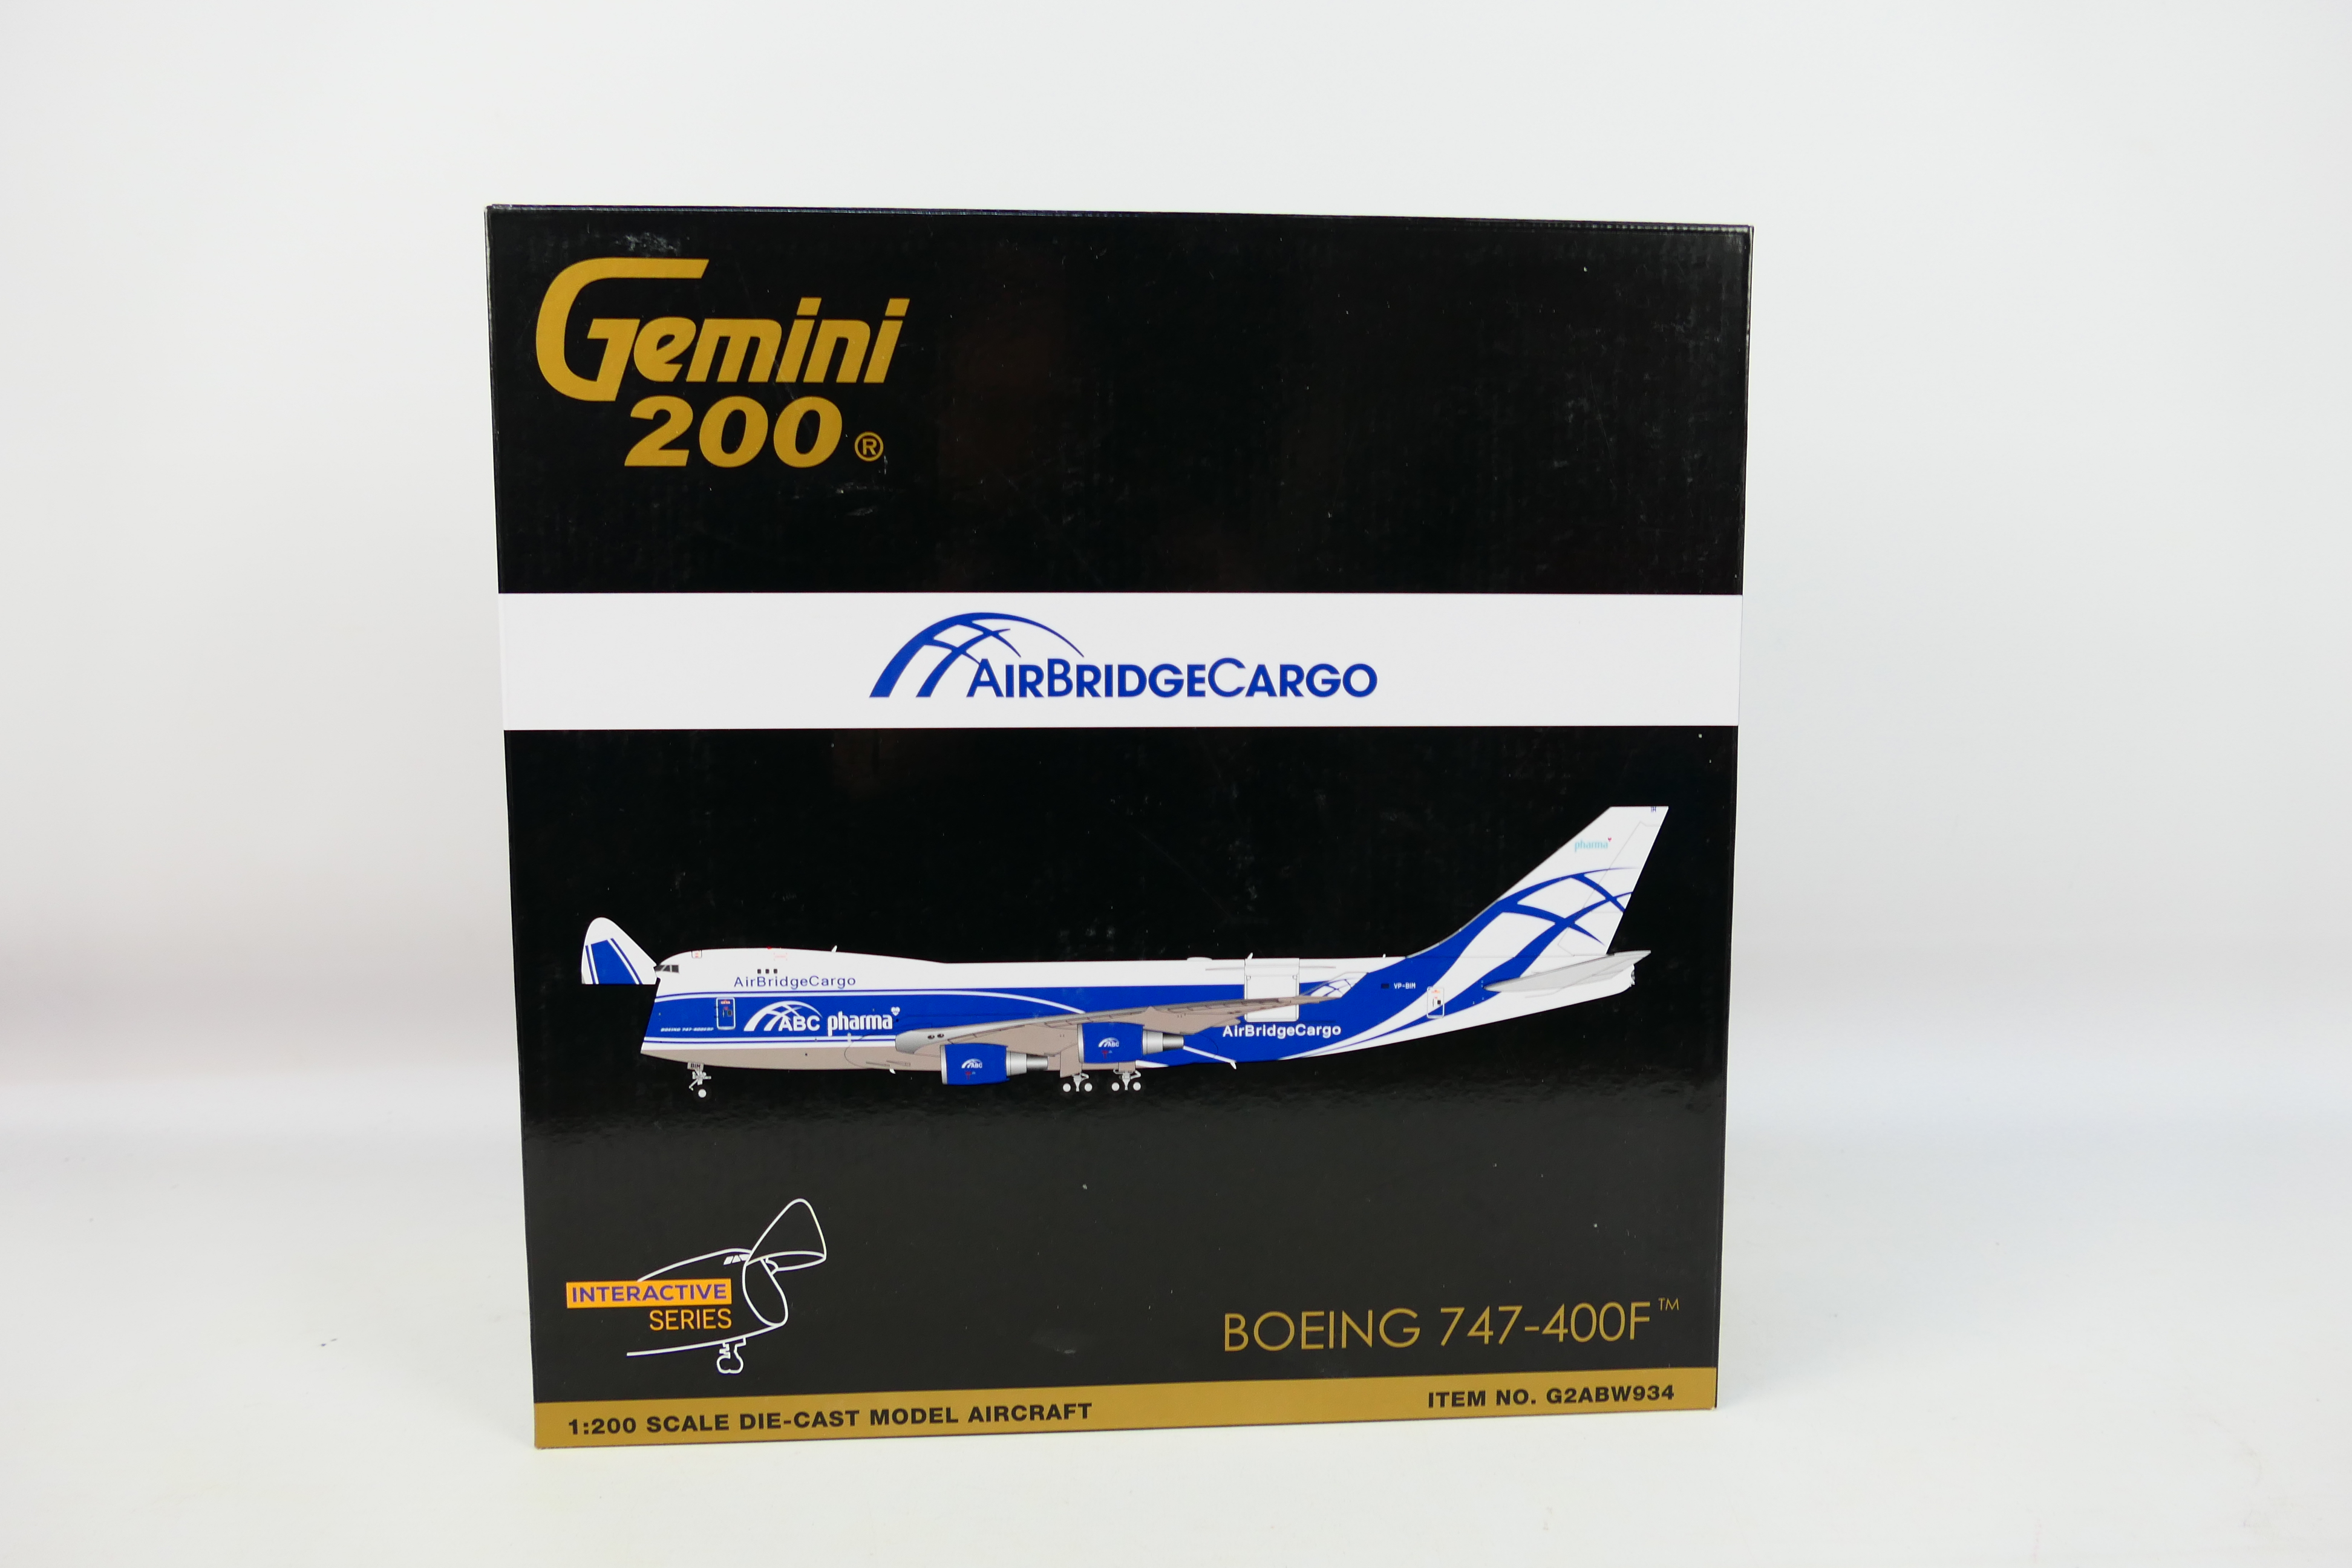 Gemini 200 - A boxed 1:200 scale Boeing 747-400F Air Bridge Cargo model in ABC Pharma livery # - Image 2 of 4